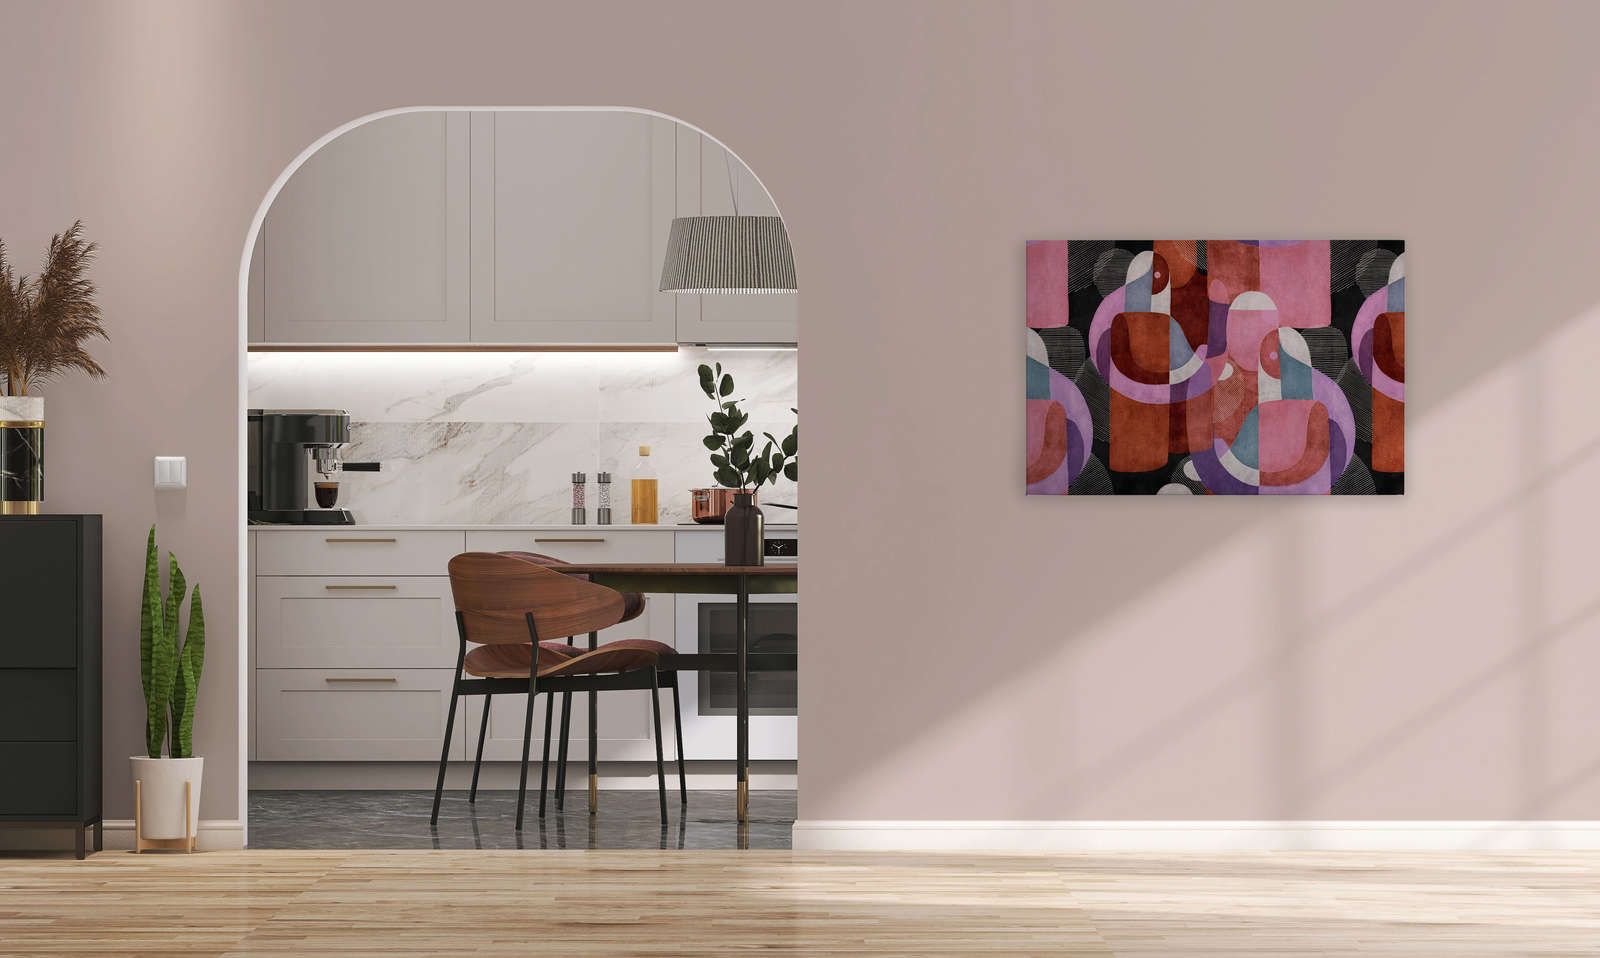             Meeting Place 2 - Leinwandbild abstraktes Ethno Design in Schwarz & Rosa – 0,90 m x 0,60 m
        